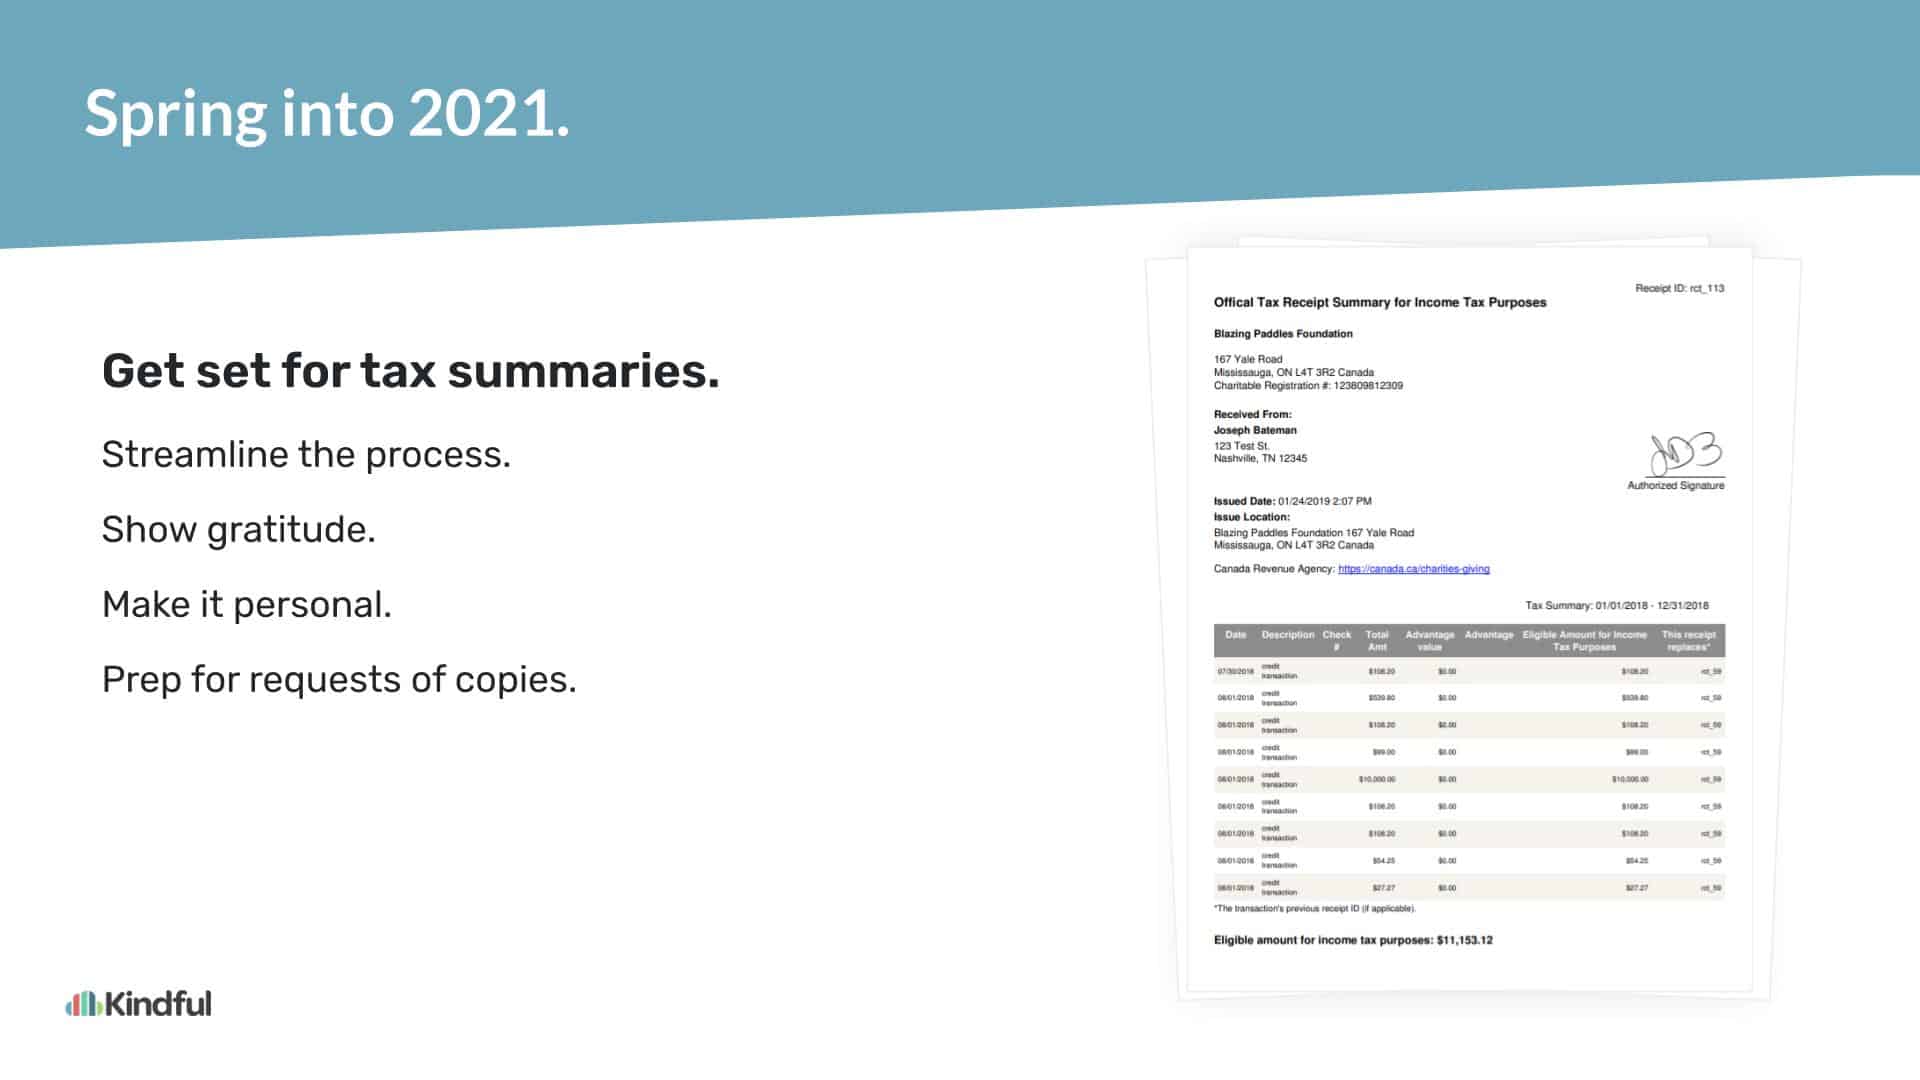 Slide 11: Get set for tax summaries.